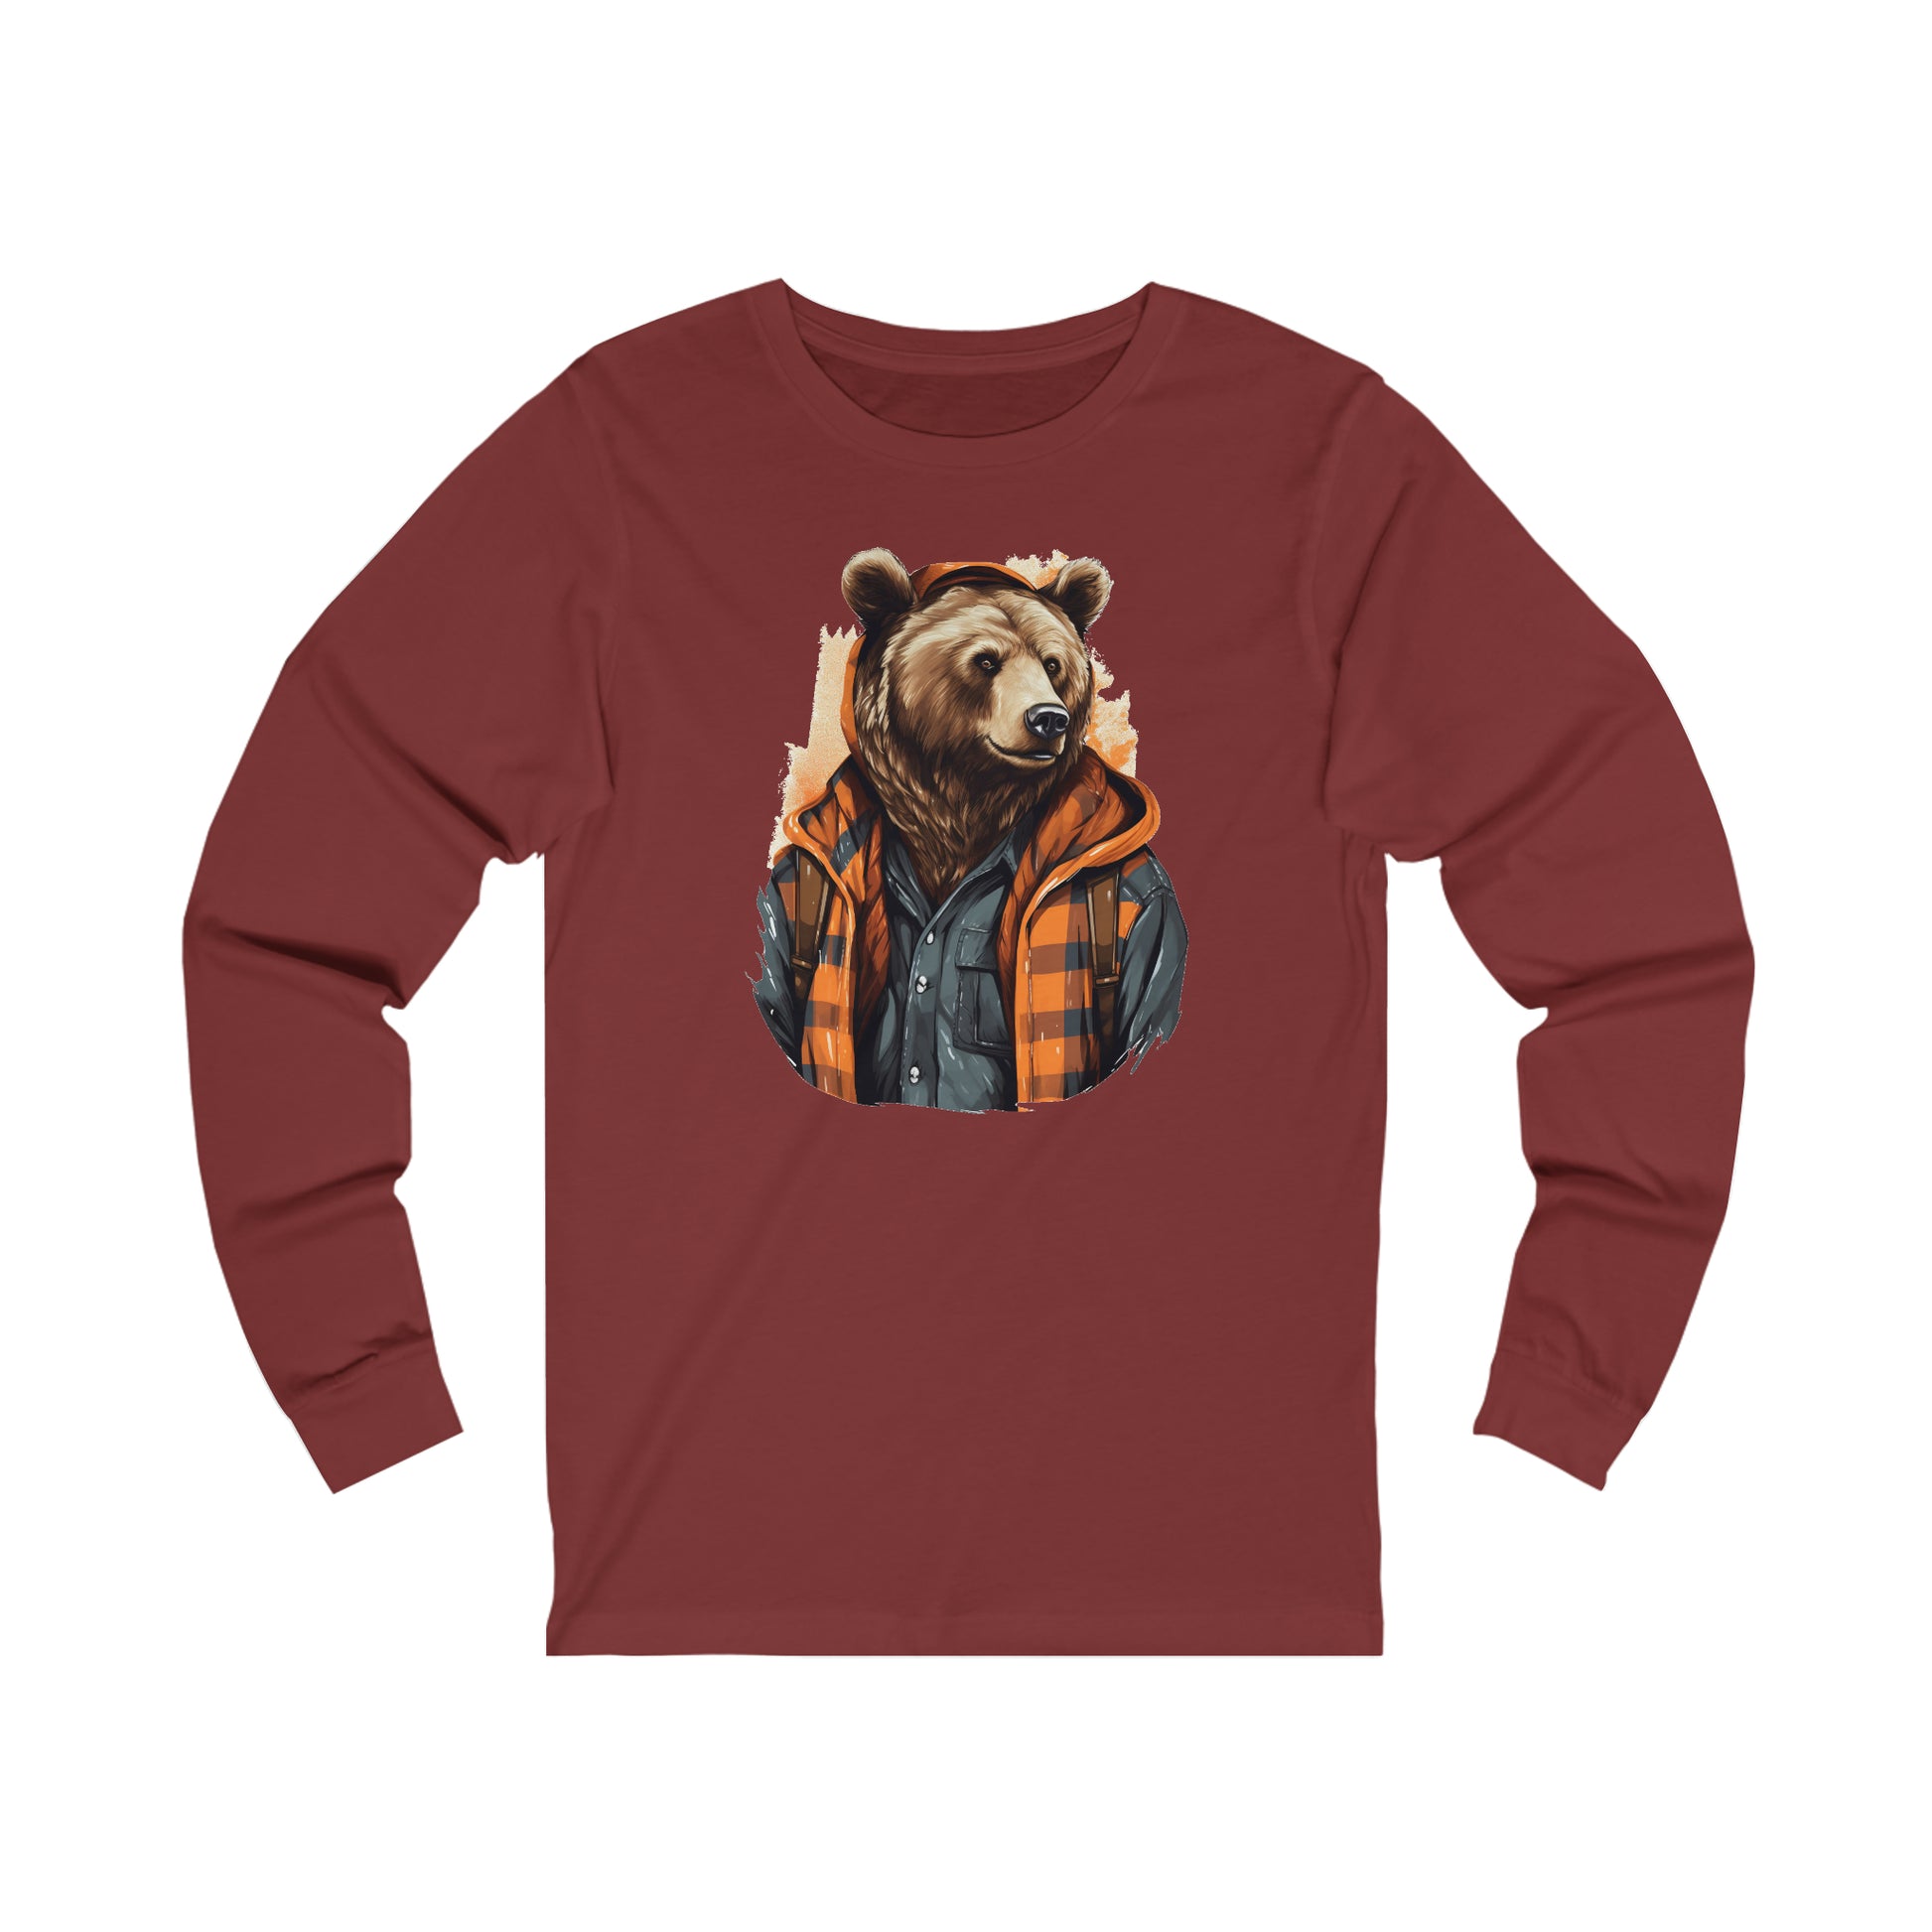 Bear Lumberjack Long Sleeve Tshirt, Fall Orange Plaid Unisex Men Women Designer Graphic Aesthetic Printed Crew Neck Tee Starcove Fashion